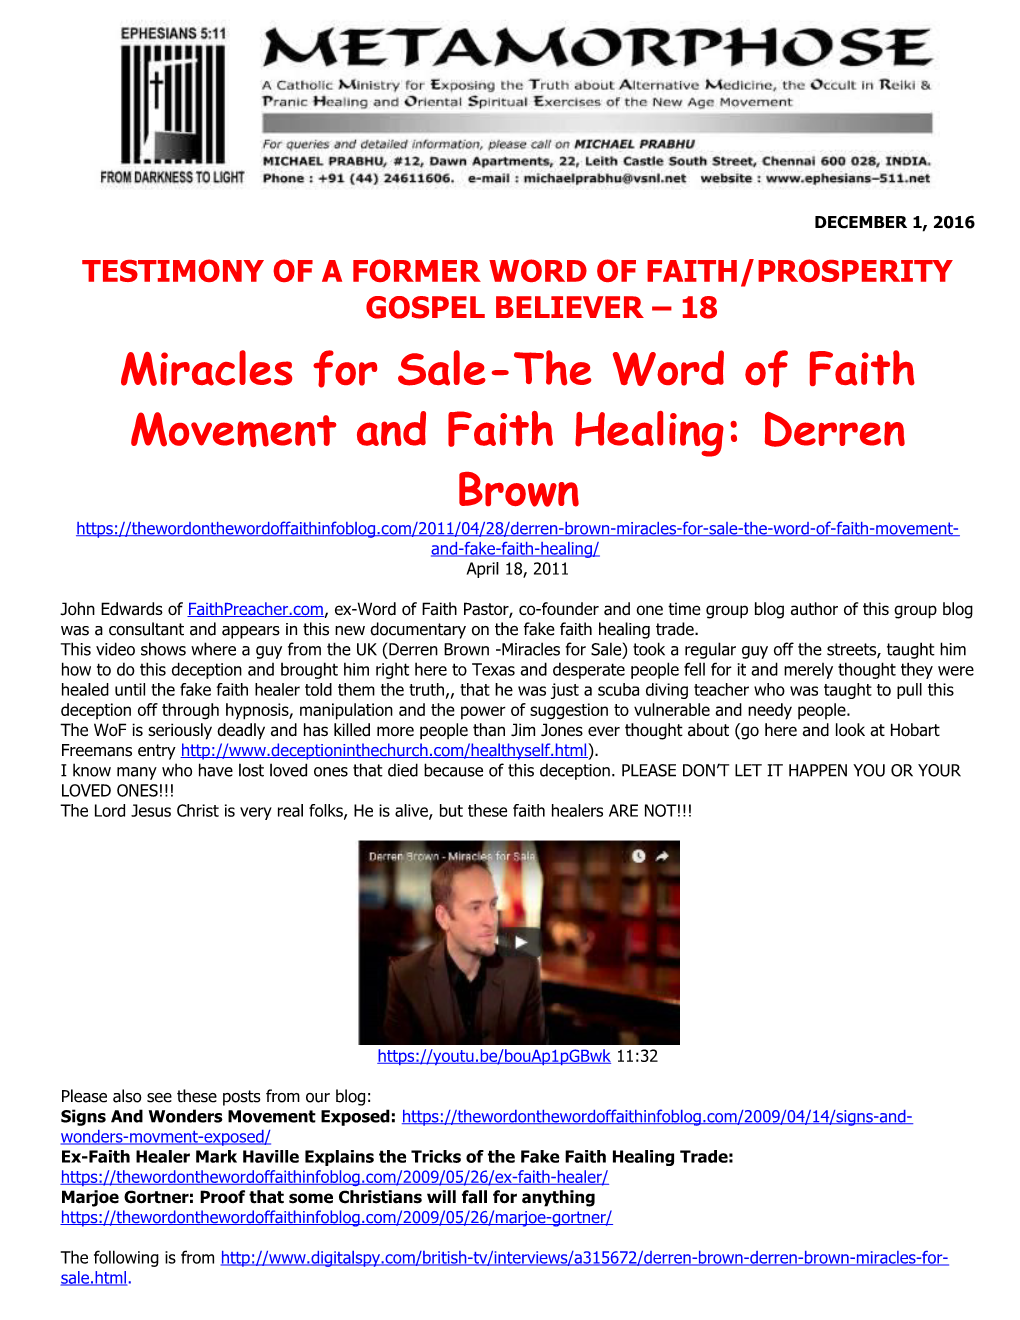 Testimony of a Former Word of Faith/Prosperity Gospel Believer 18